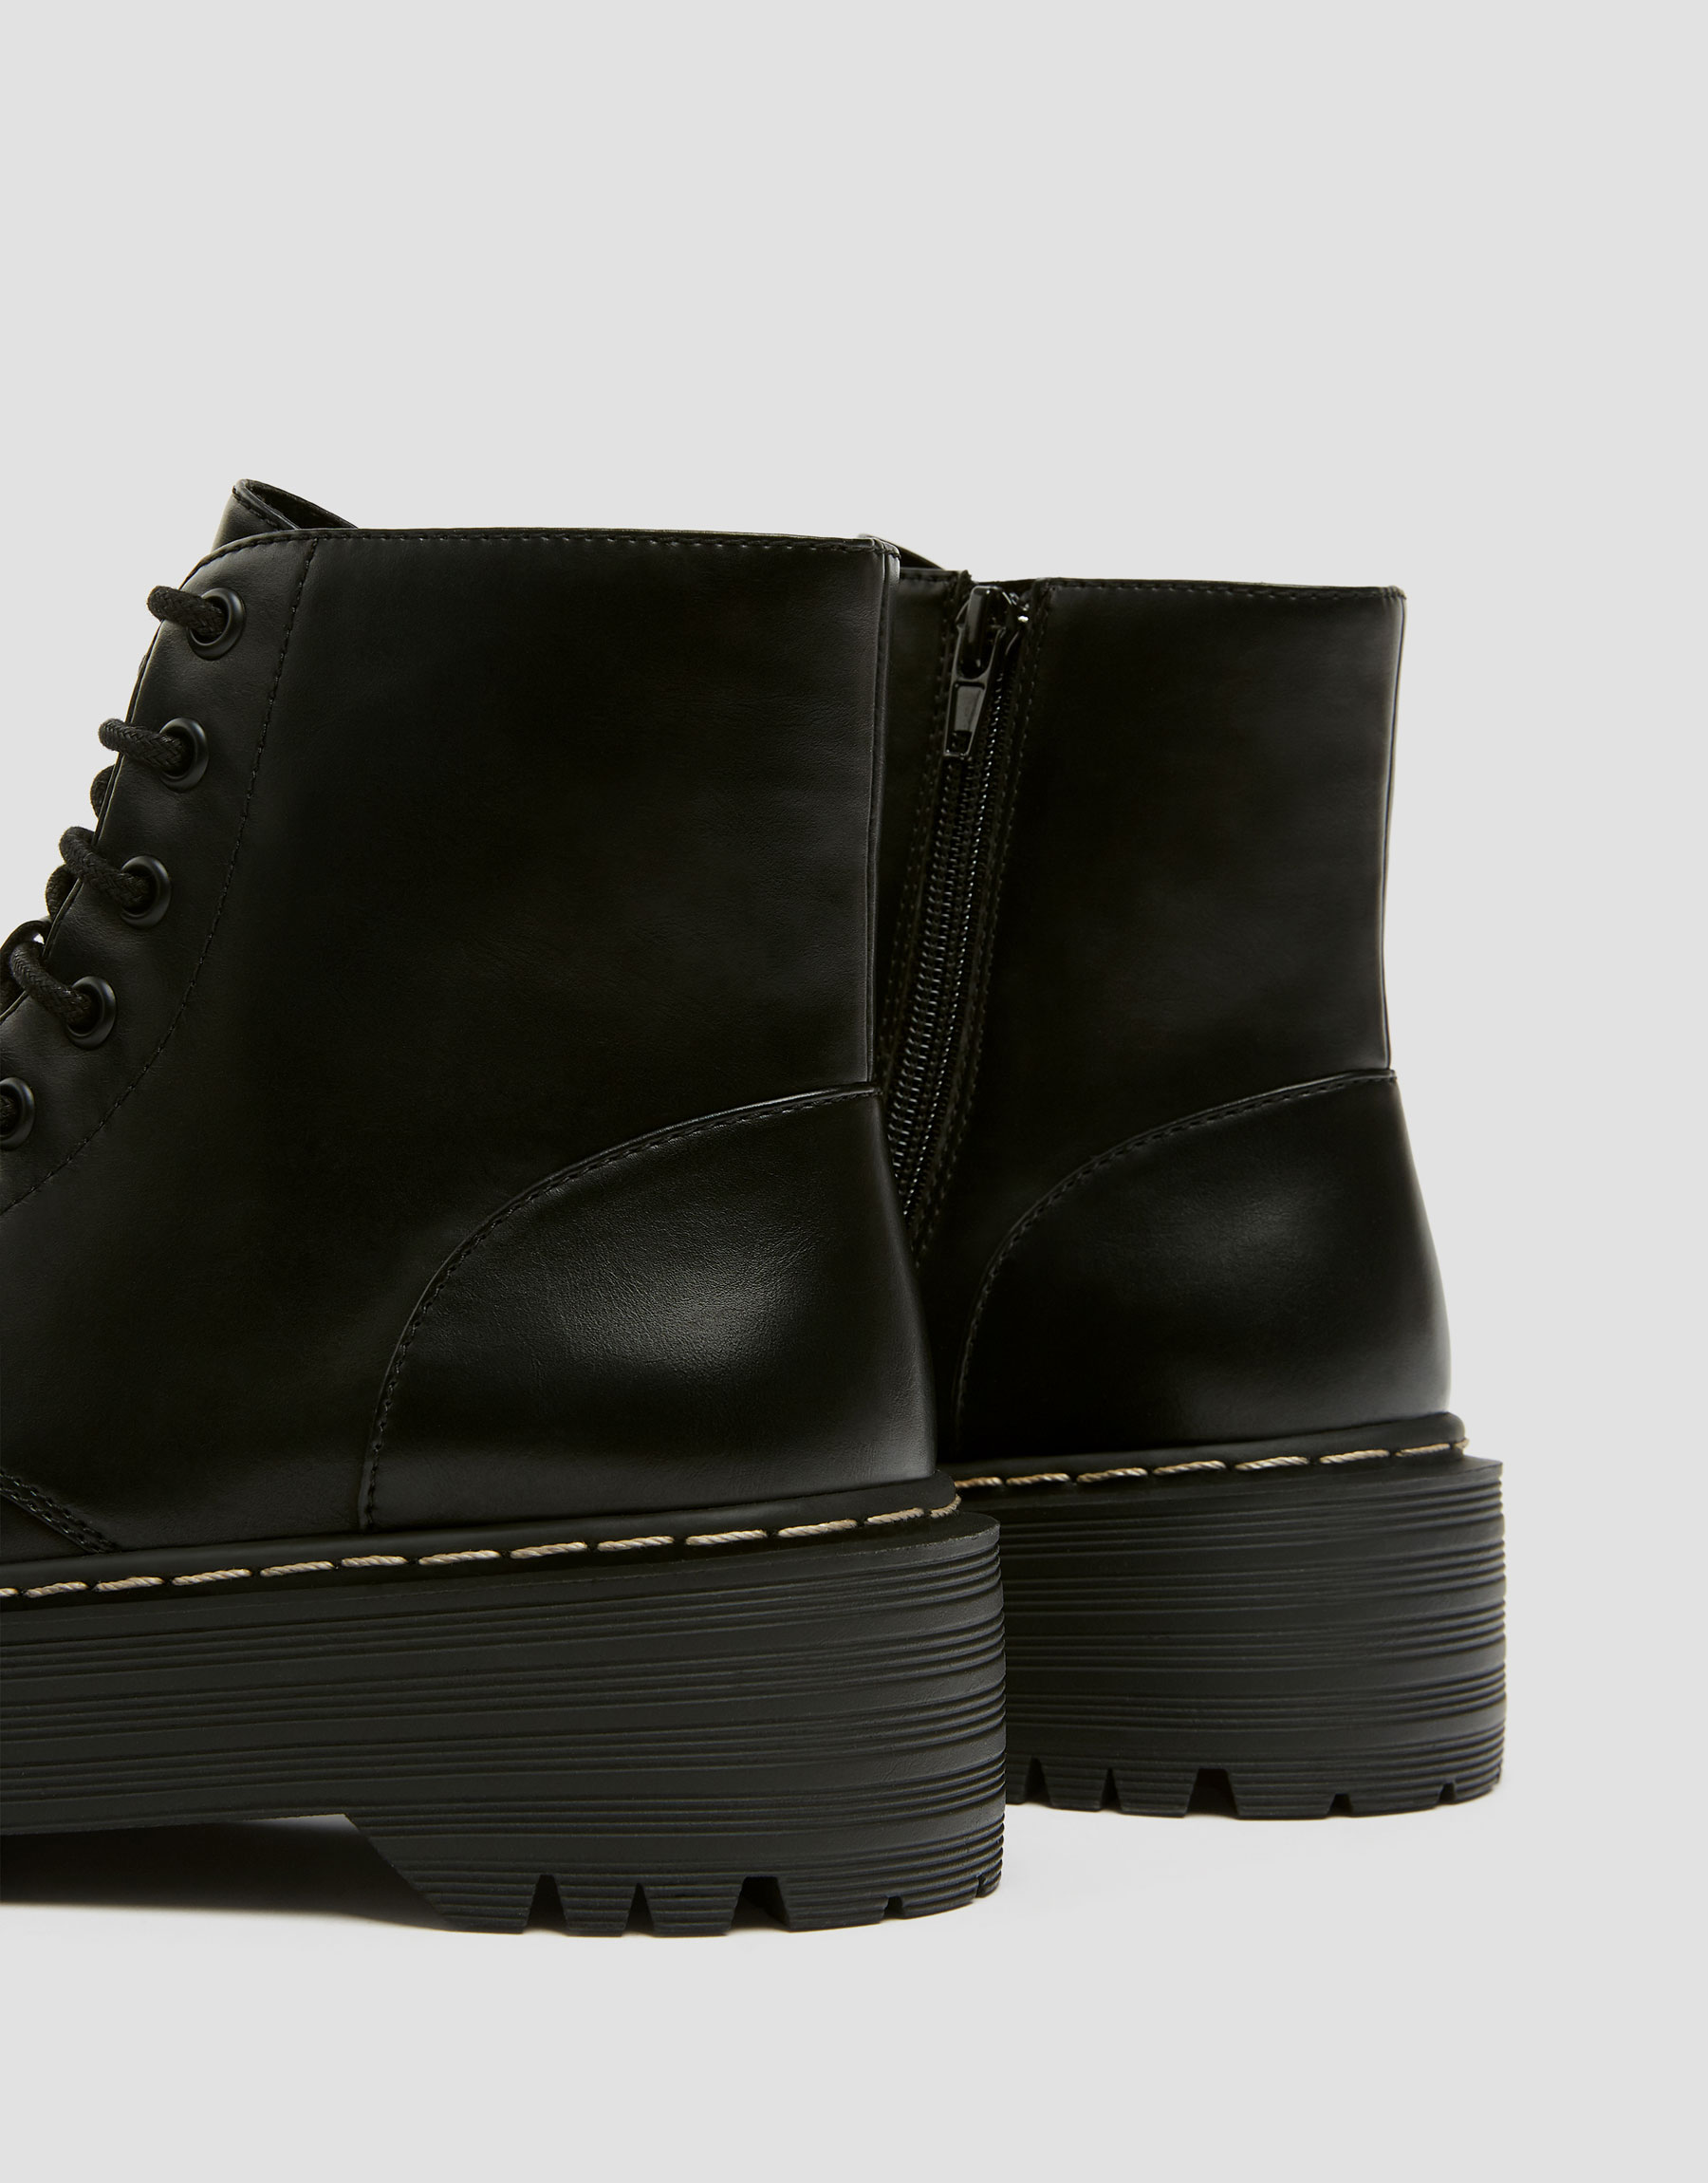 Modalite.net - Pull & Bear - Black platform sole boots